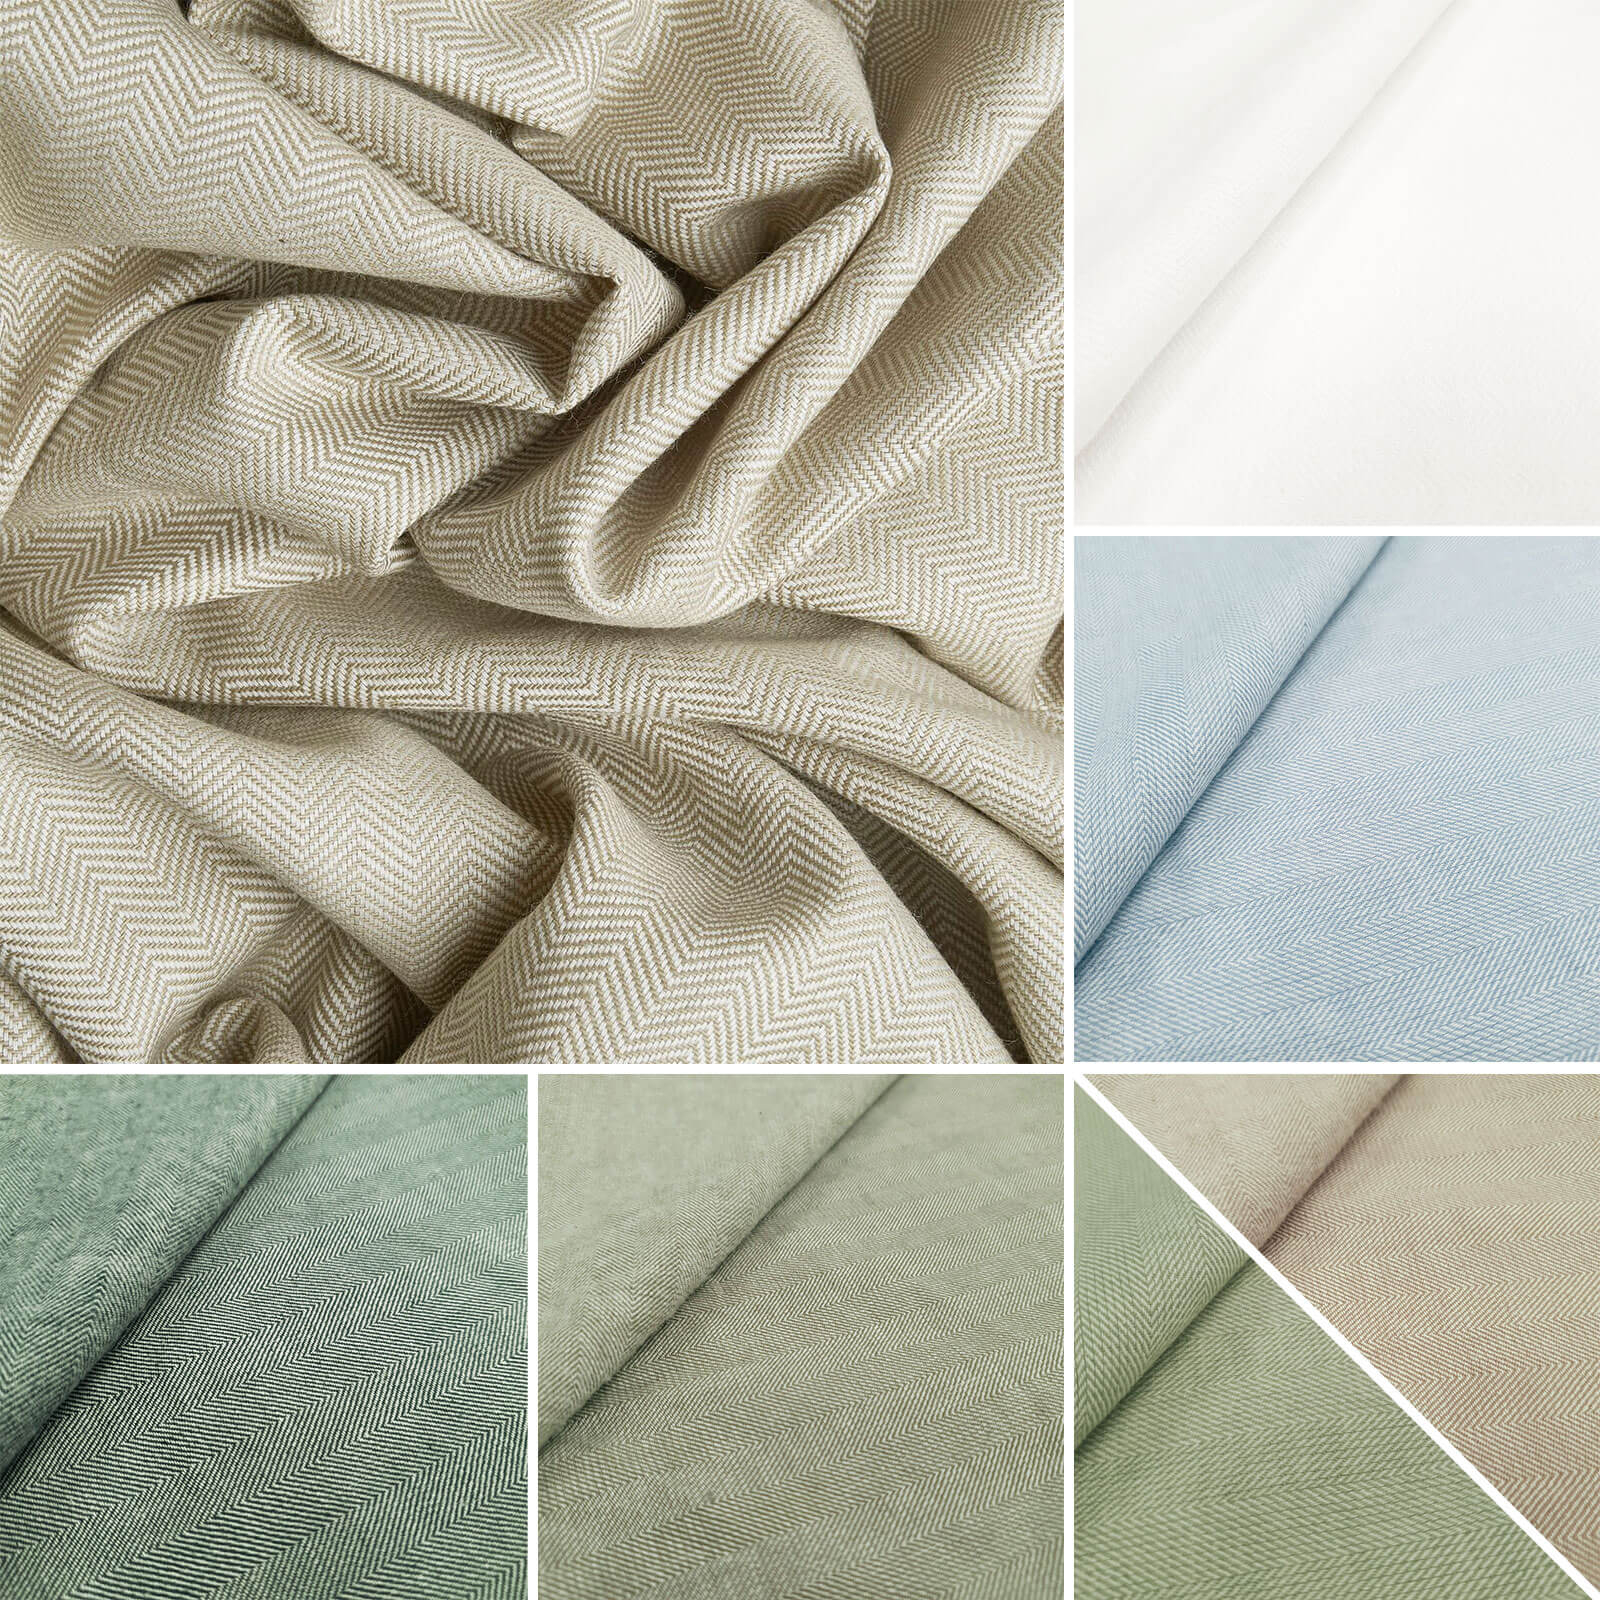 Fritz - Linen fabric with herringbone pattern